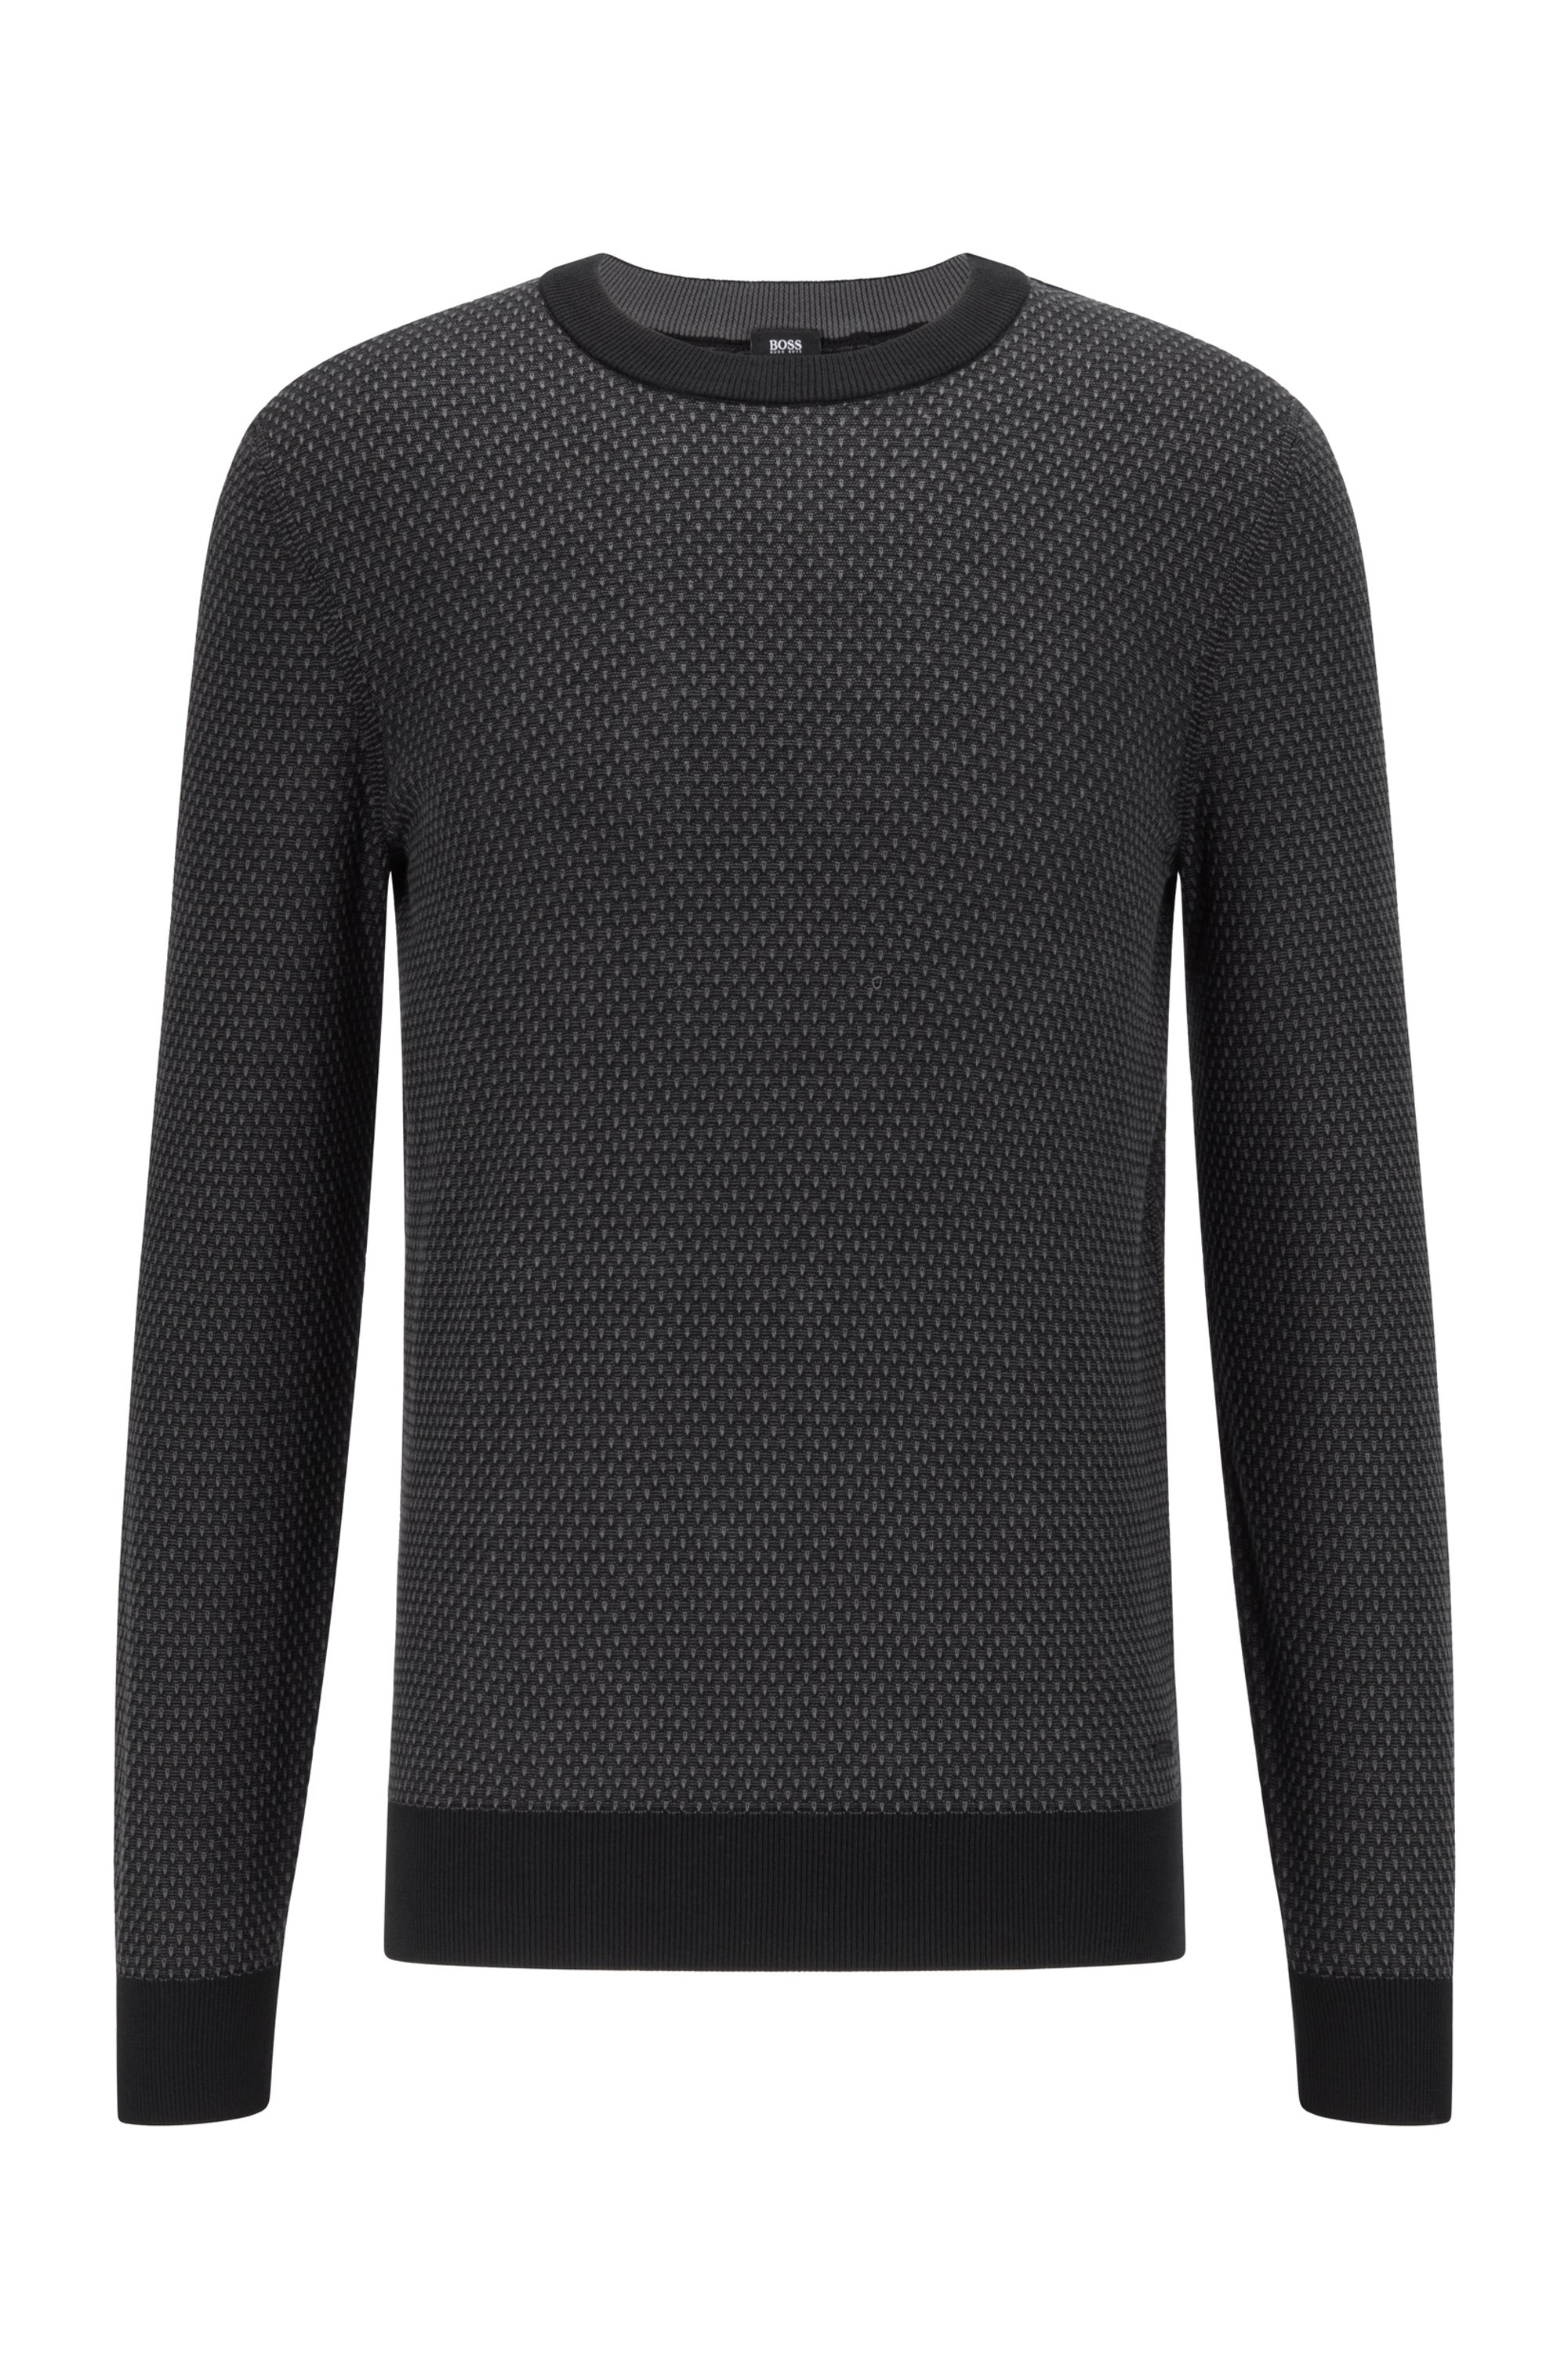 Jacquard-knit sweater in organic cotton and kapok, Black